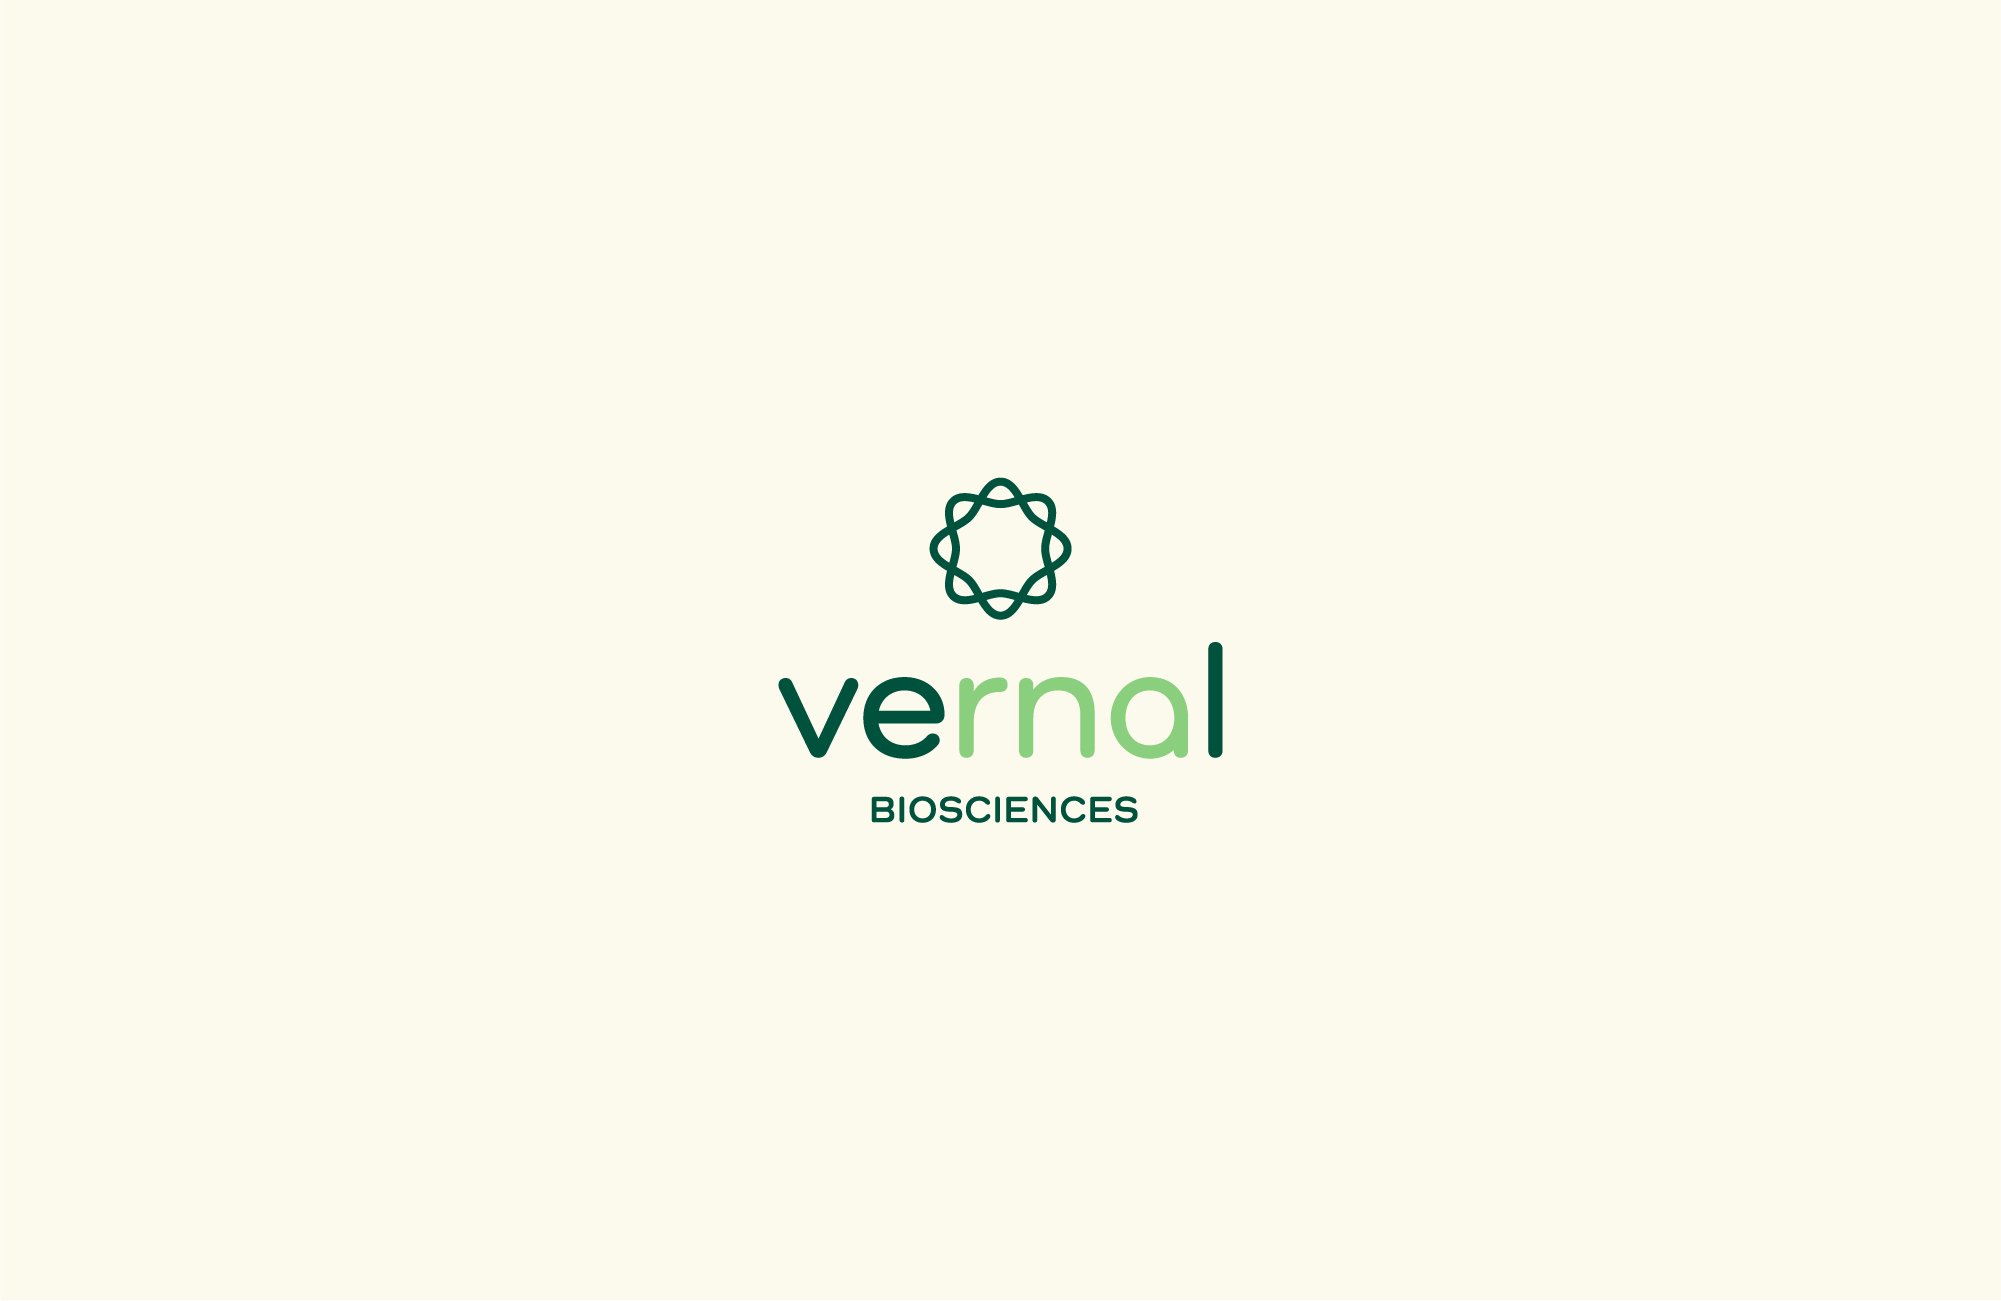 more-ours-vernal-biosciences-logo2.jpg